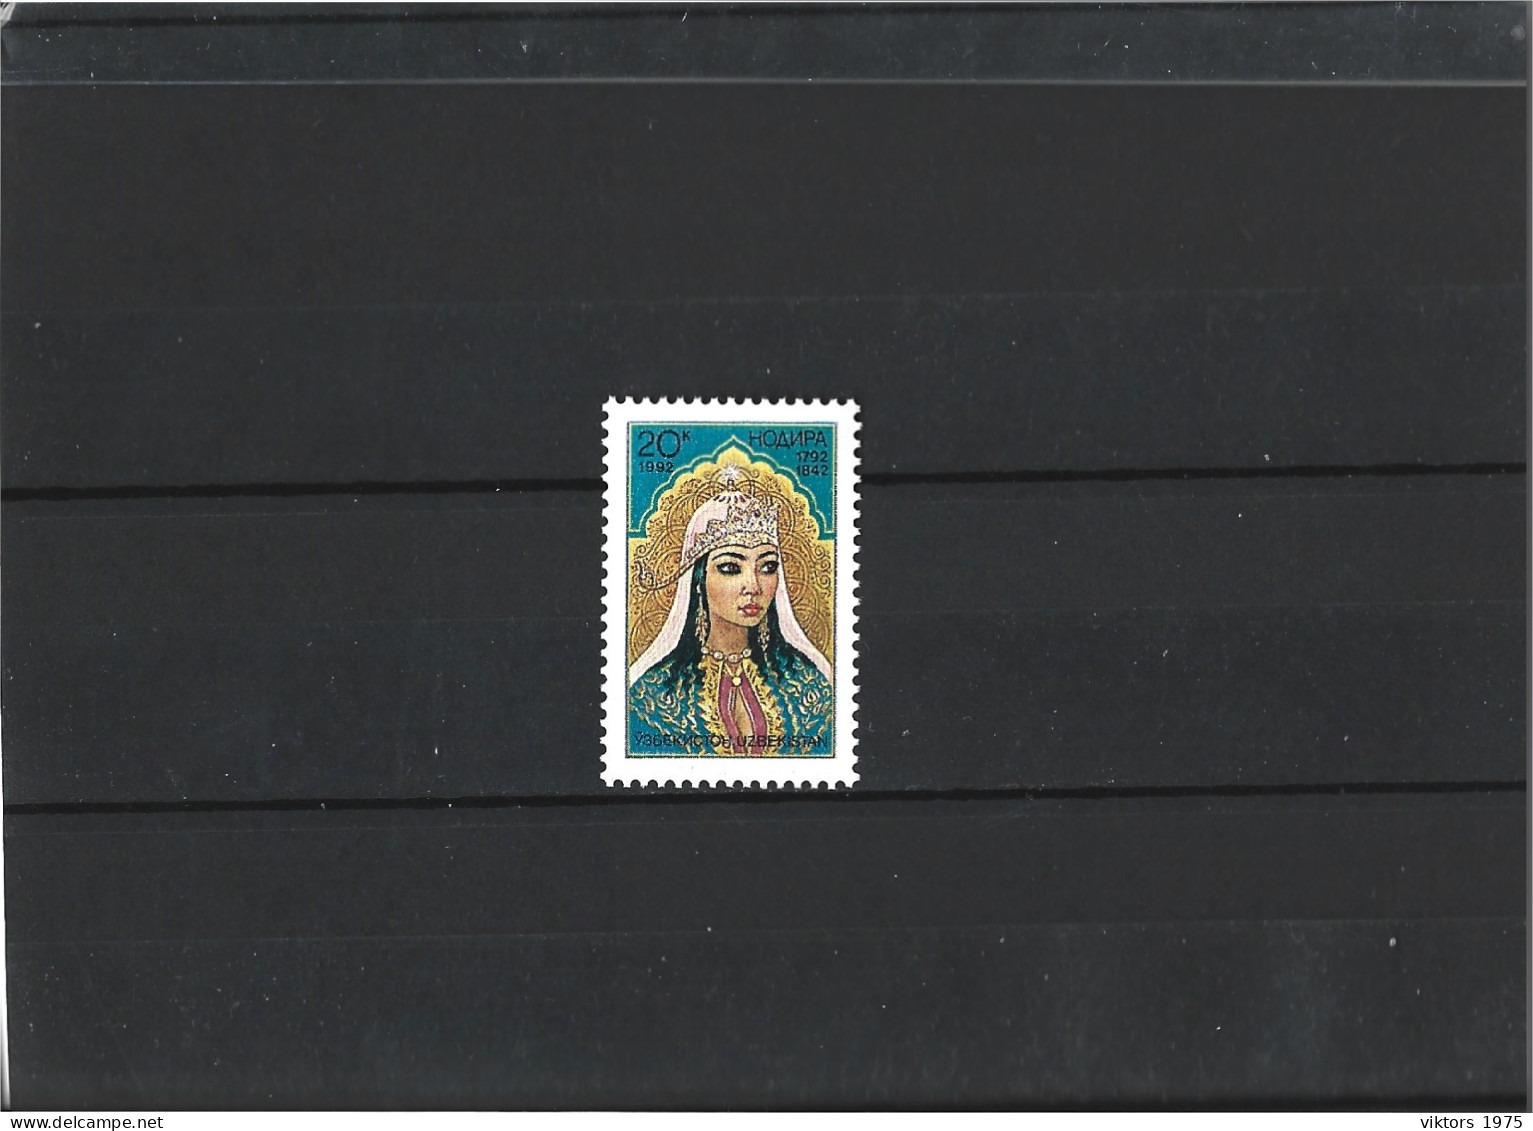 MNH Stamp Nr.1 In MICHEL Catalog - Uzbekistan